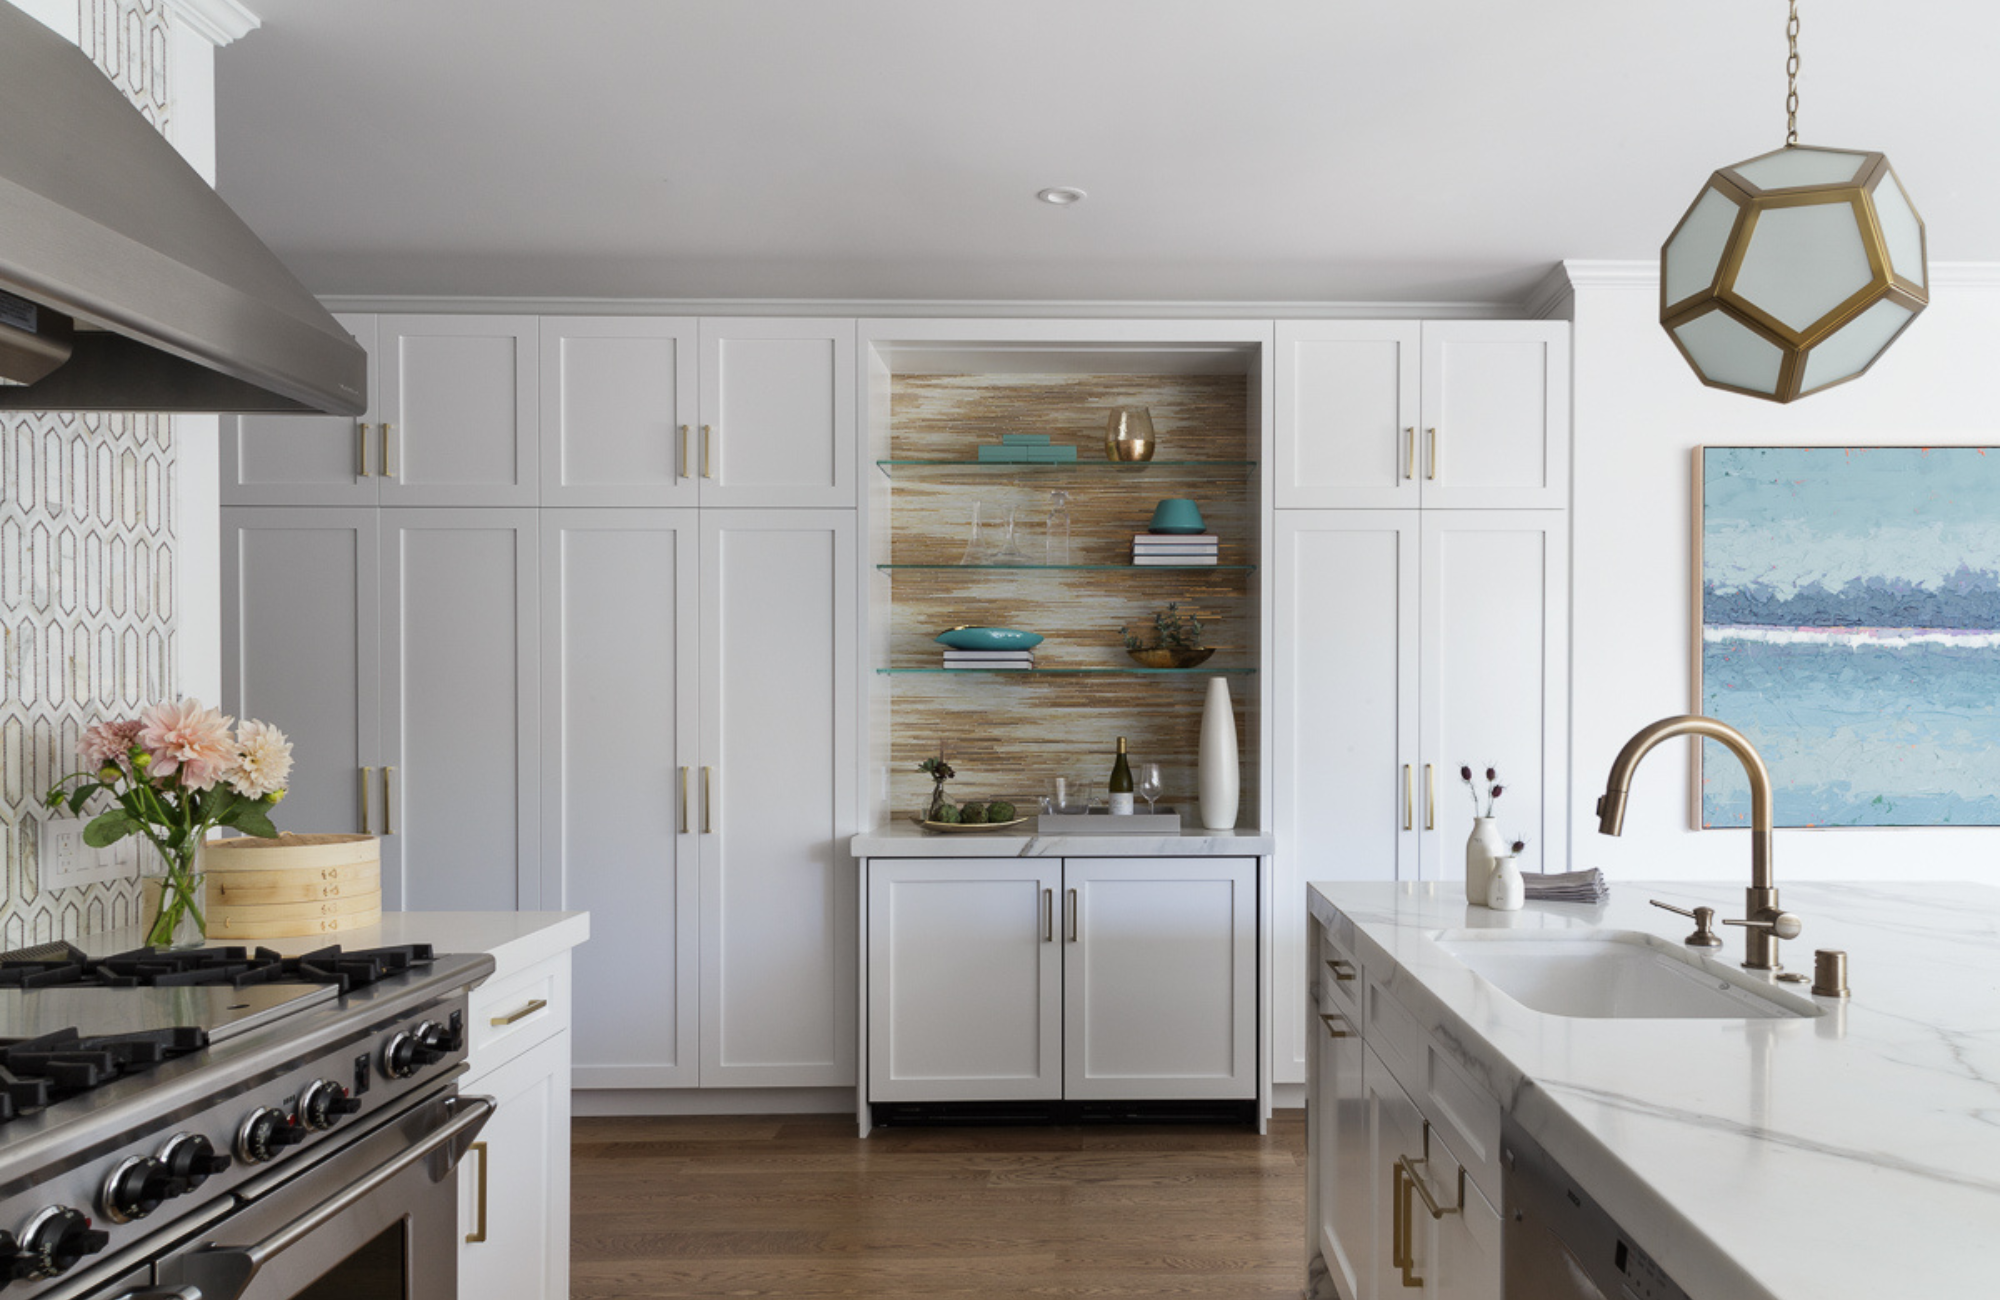 coddington-design-marin-ca-interior-designer-secrets-enjoying-every-room-luxury-kitchen-renovation-custom-cabinetry-brass-hardware-tile-backsplash